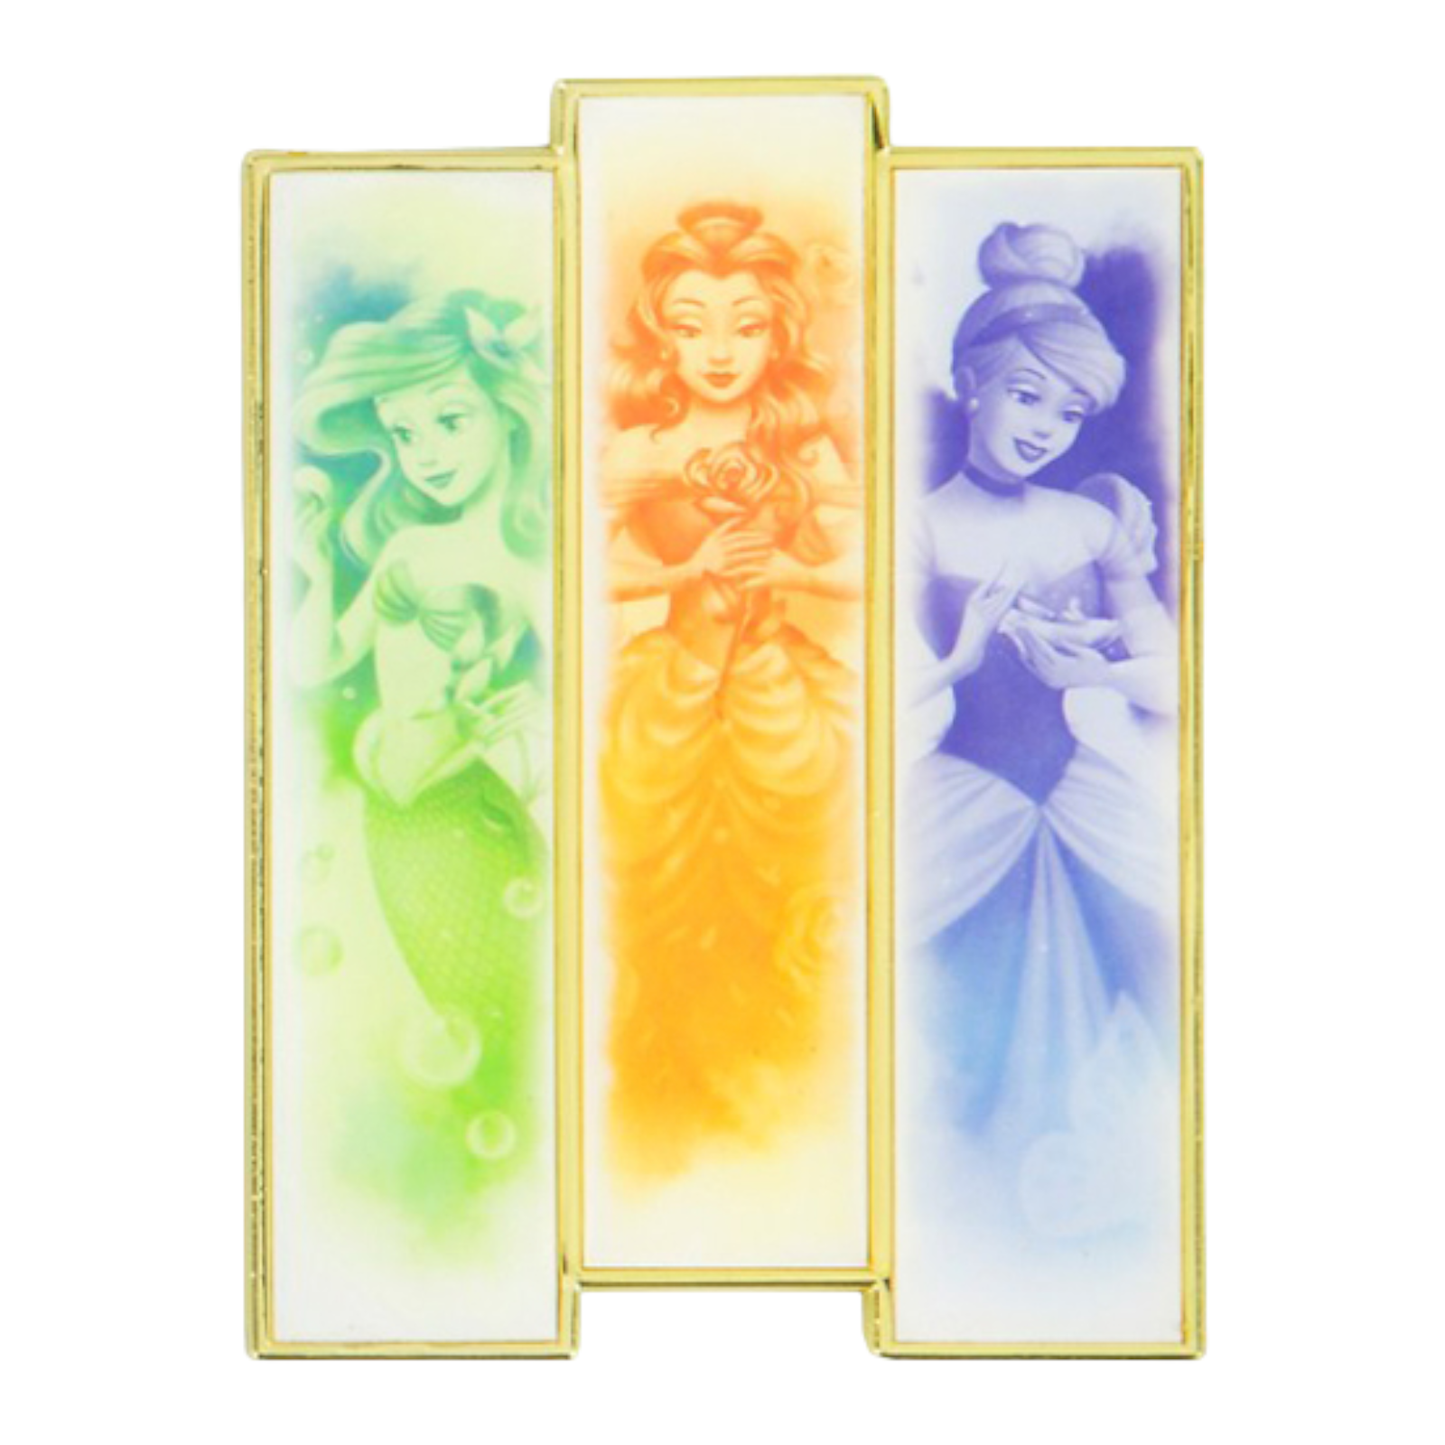 Watercolor Princesses Disney Magnet - Ariel, Belle, Cinderella